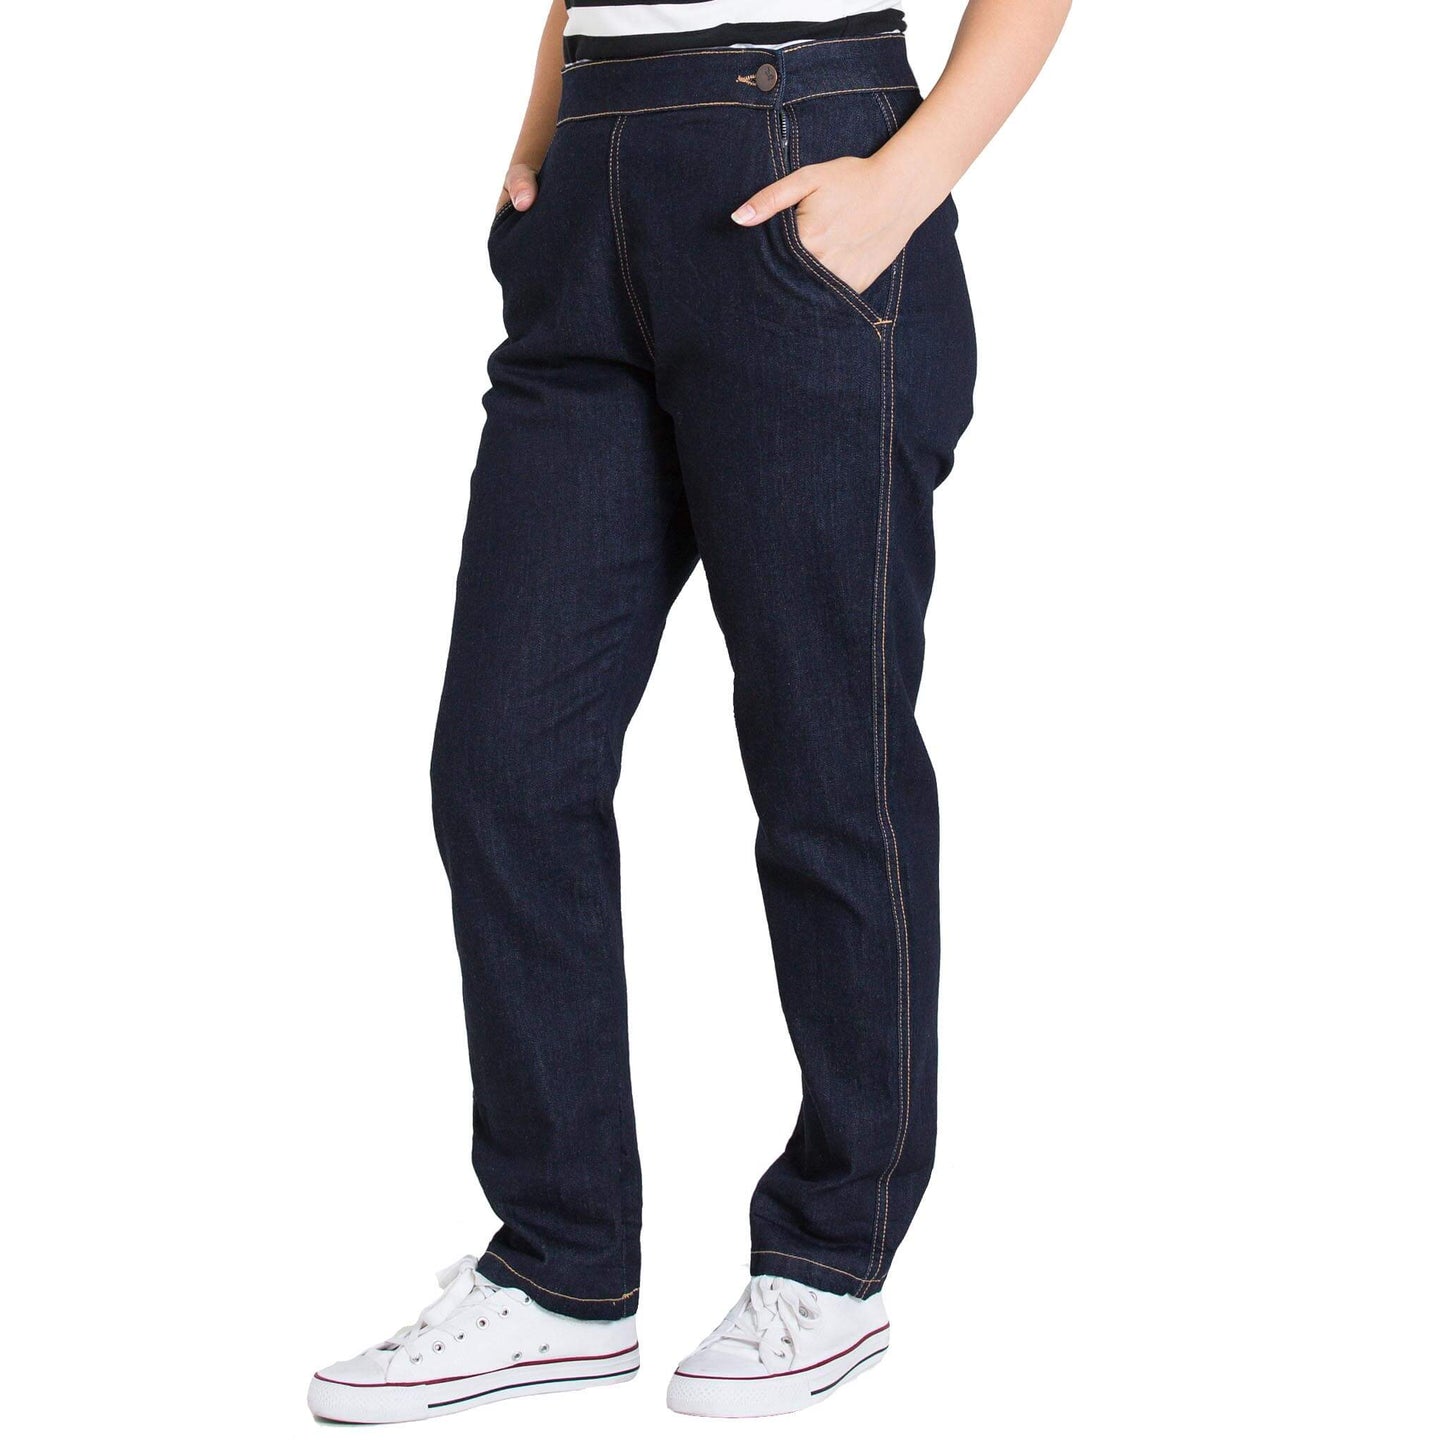 Hell Bunny Charlie Denim Capris/Jeans - Navy Blue - model side unrolled